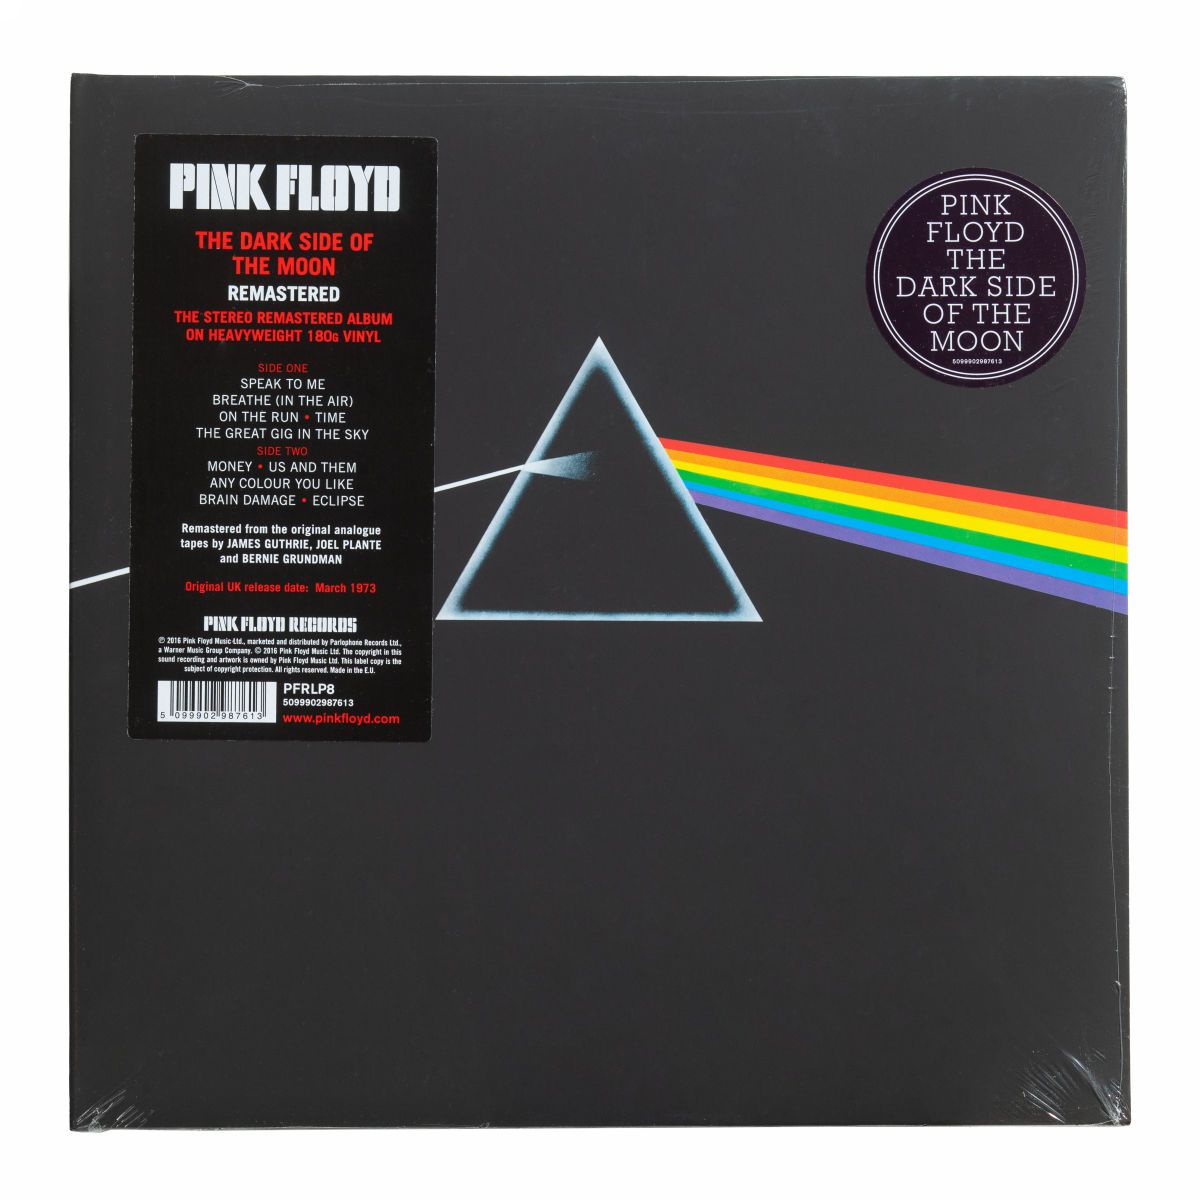 Lp moon. Обложки дисков Пинк Флойд. Dark Side of the Moon LP on the Player обложка и пластинка в интерьере. 7460012 Pink Floyd the Dark Side Moon CD.